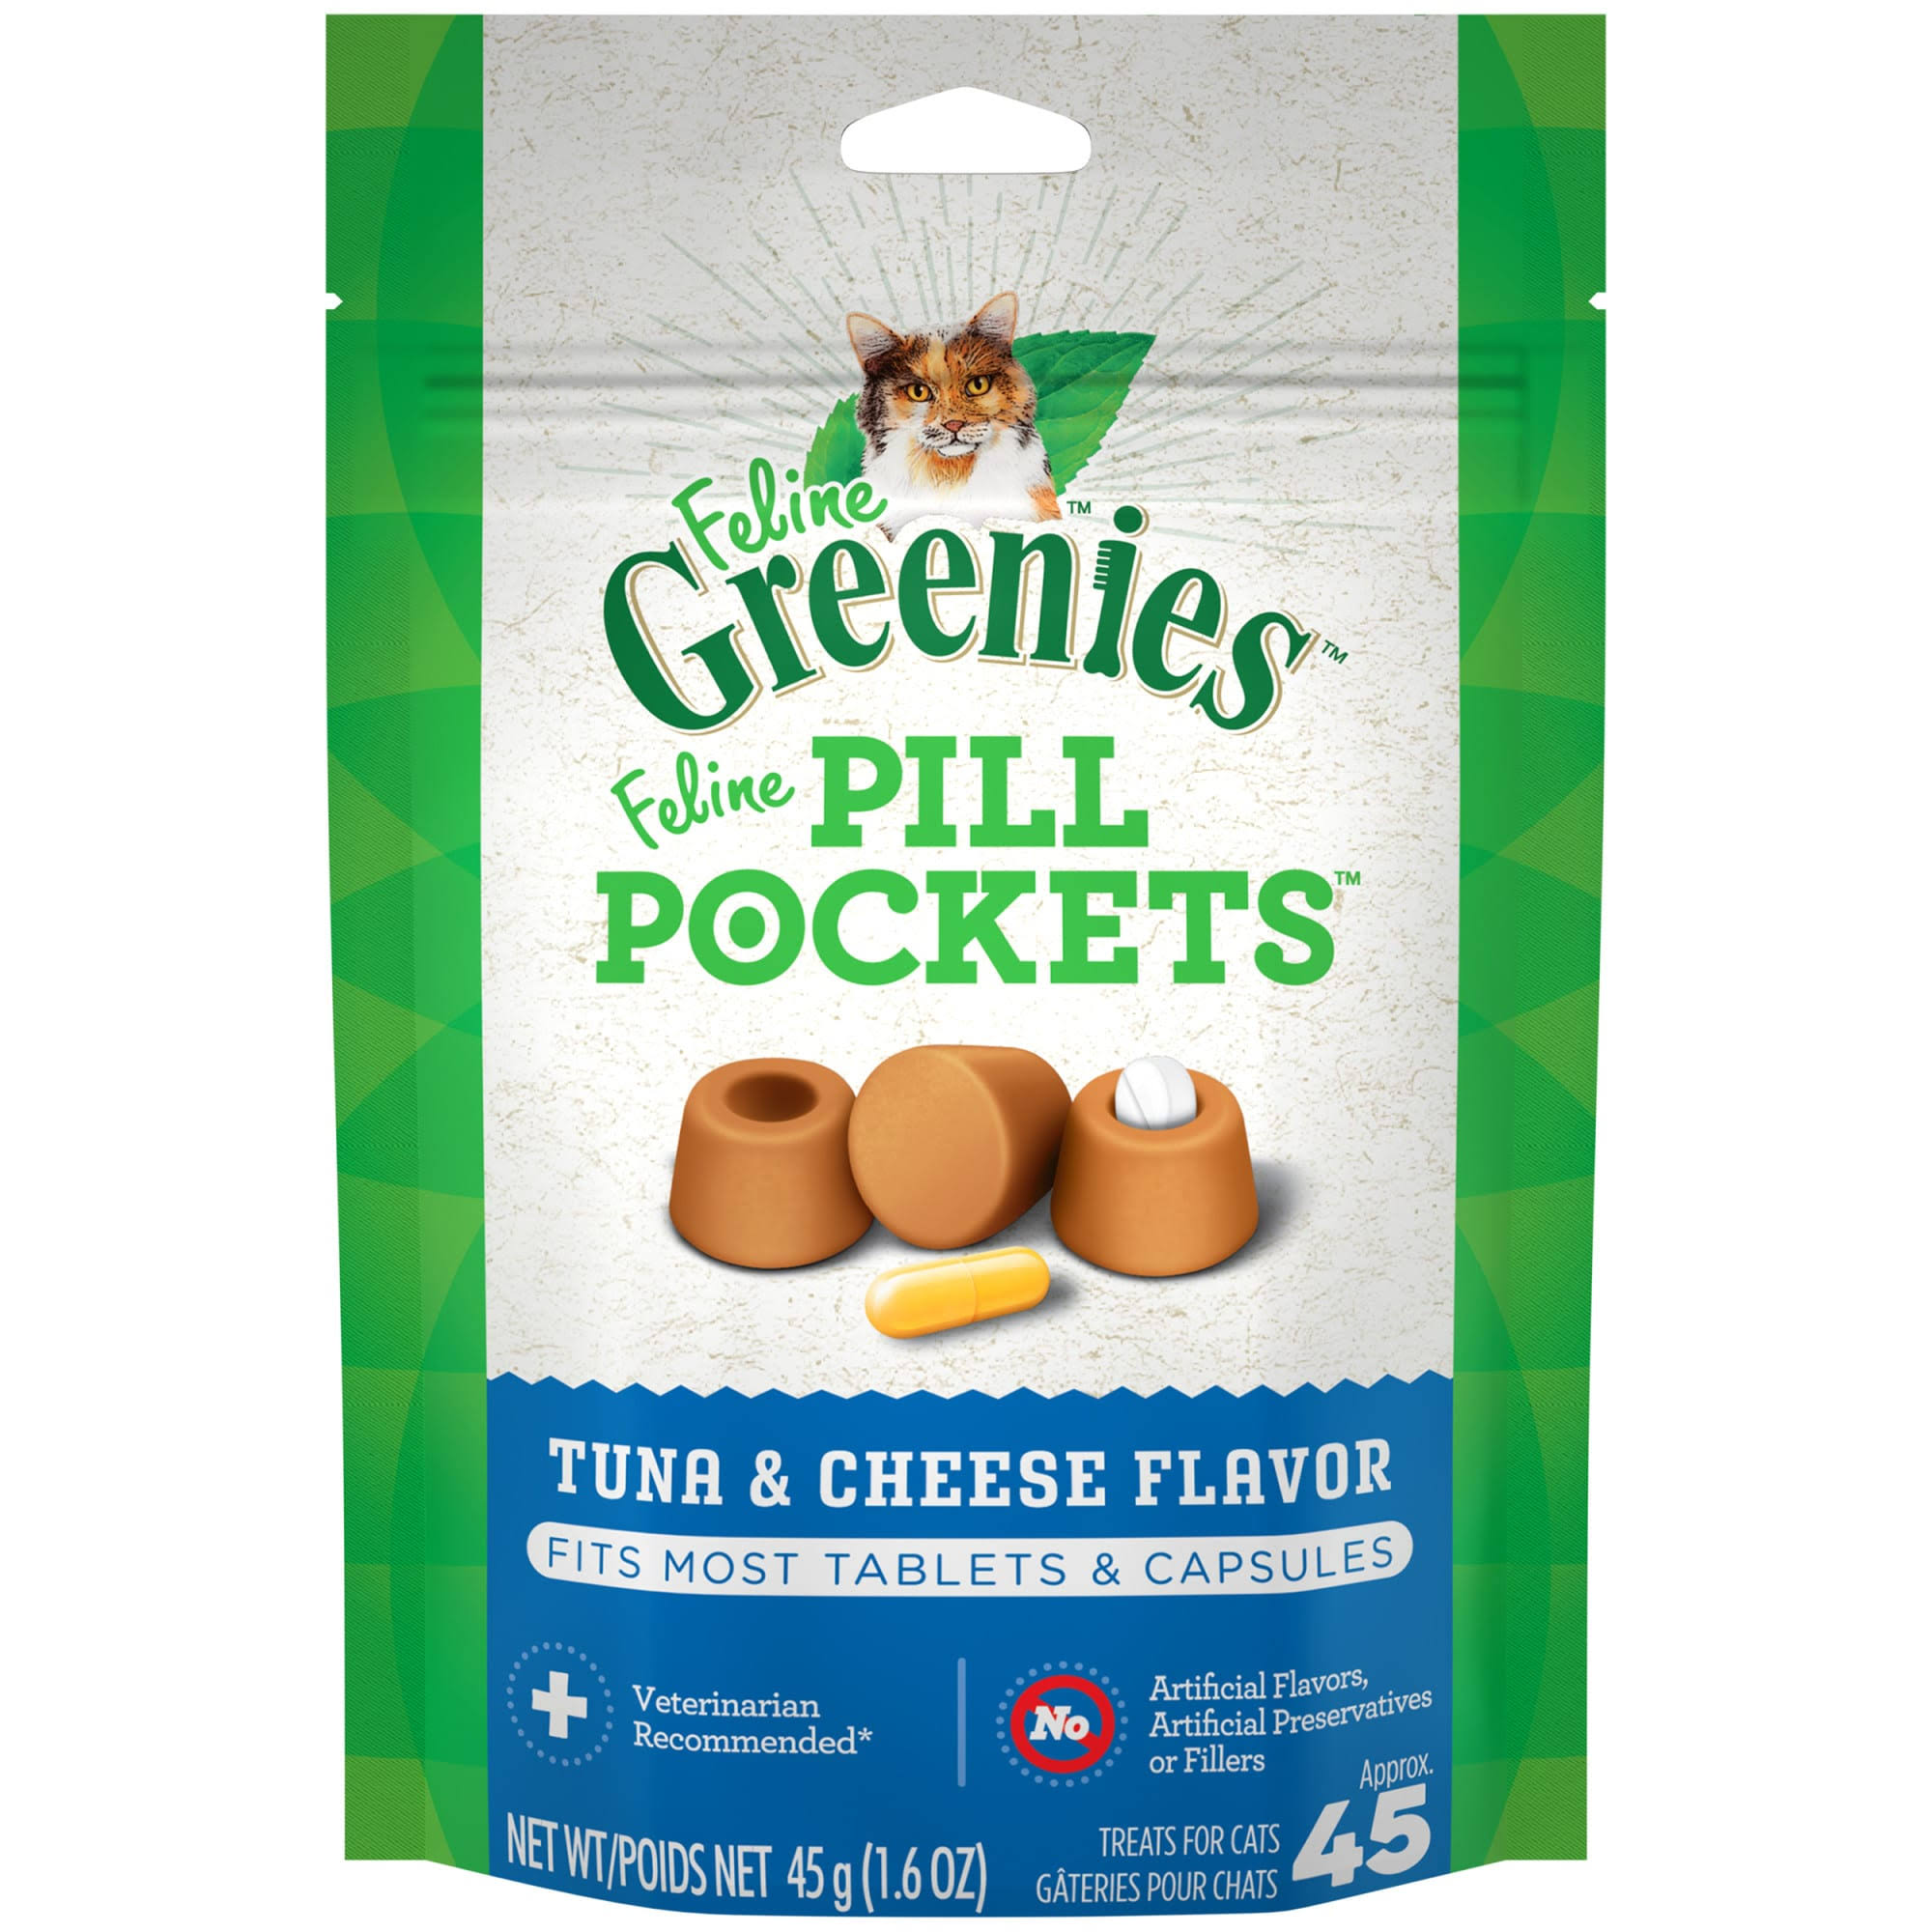 Feline Greenies Pill Pockets Tuna & Cheese Flavor Cat Treats 1.6-oz